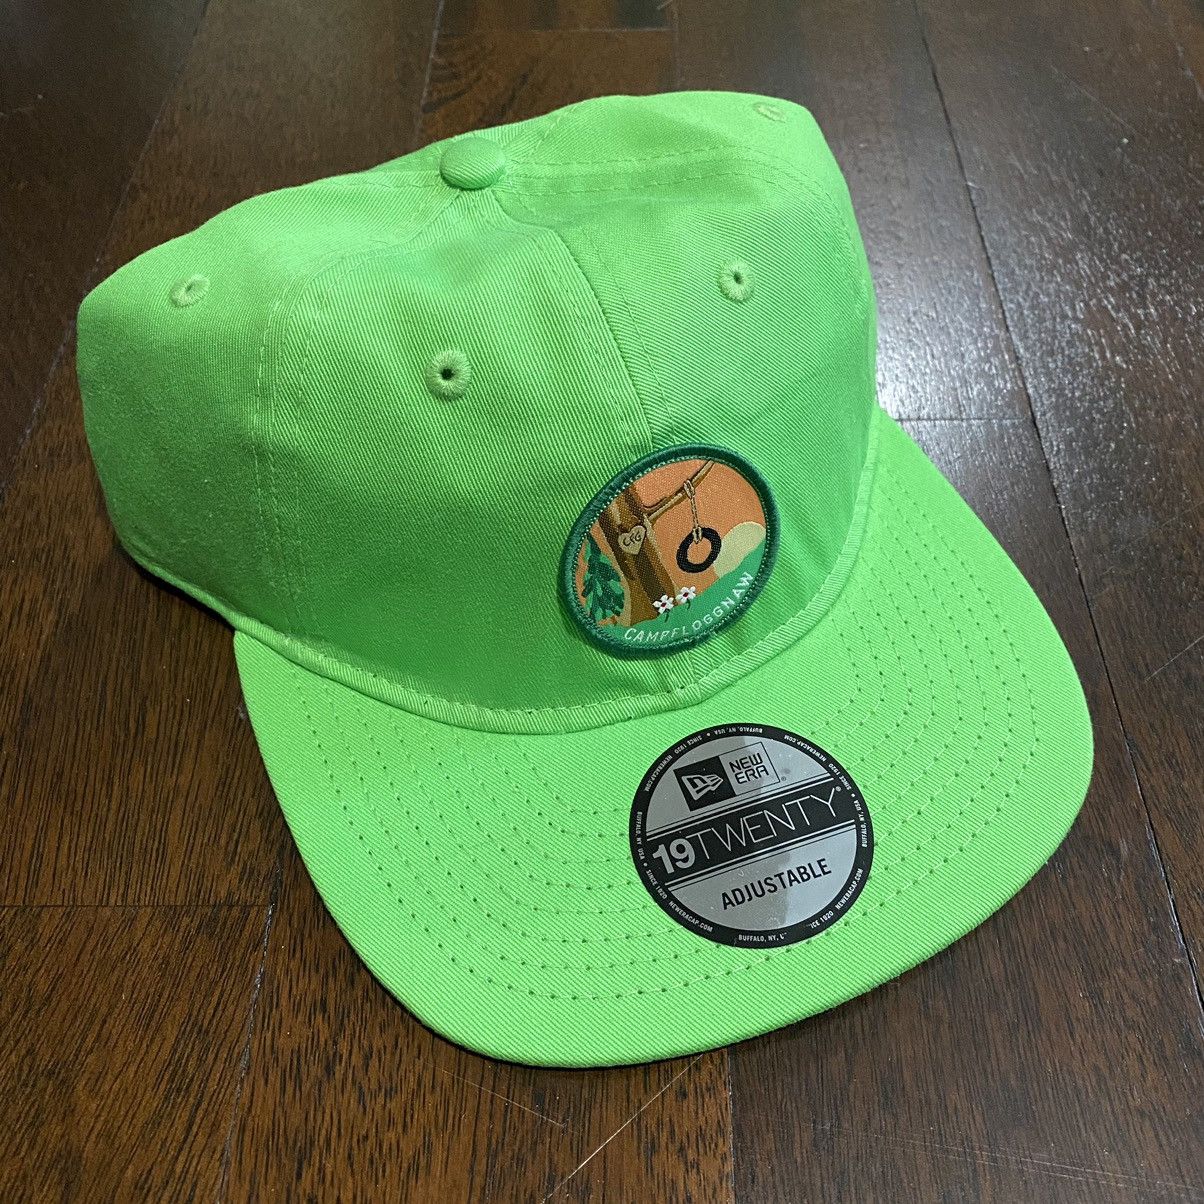 Pre-owned Golf Wang X New Era 2015 Golf Wang Camp Floggnaw New Era Snapback Hat In Green